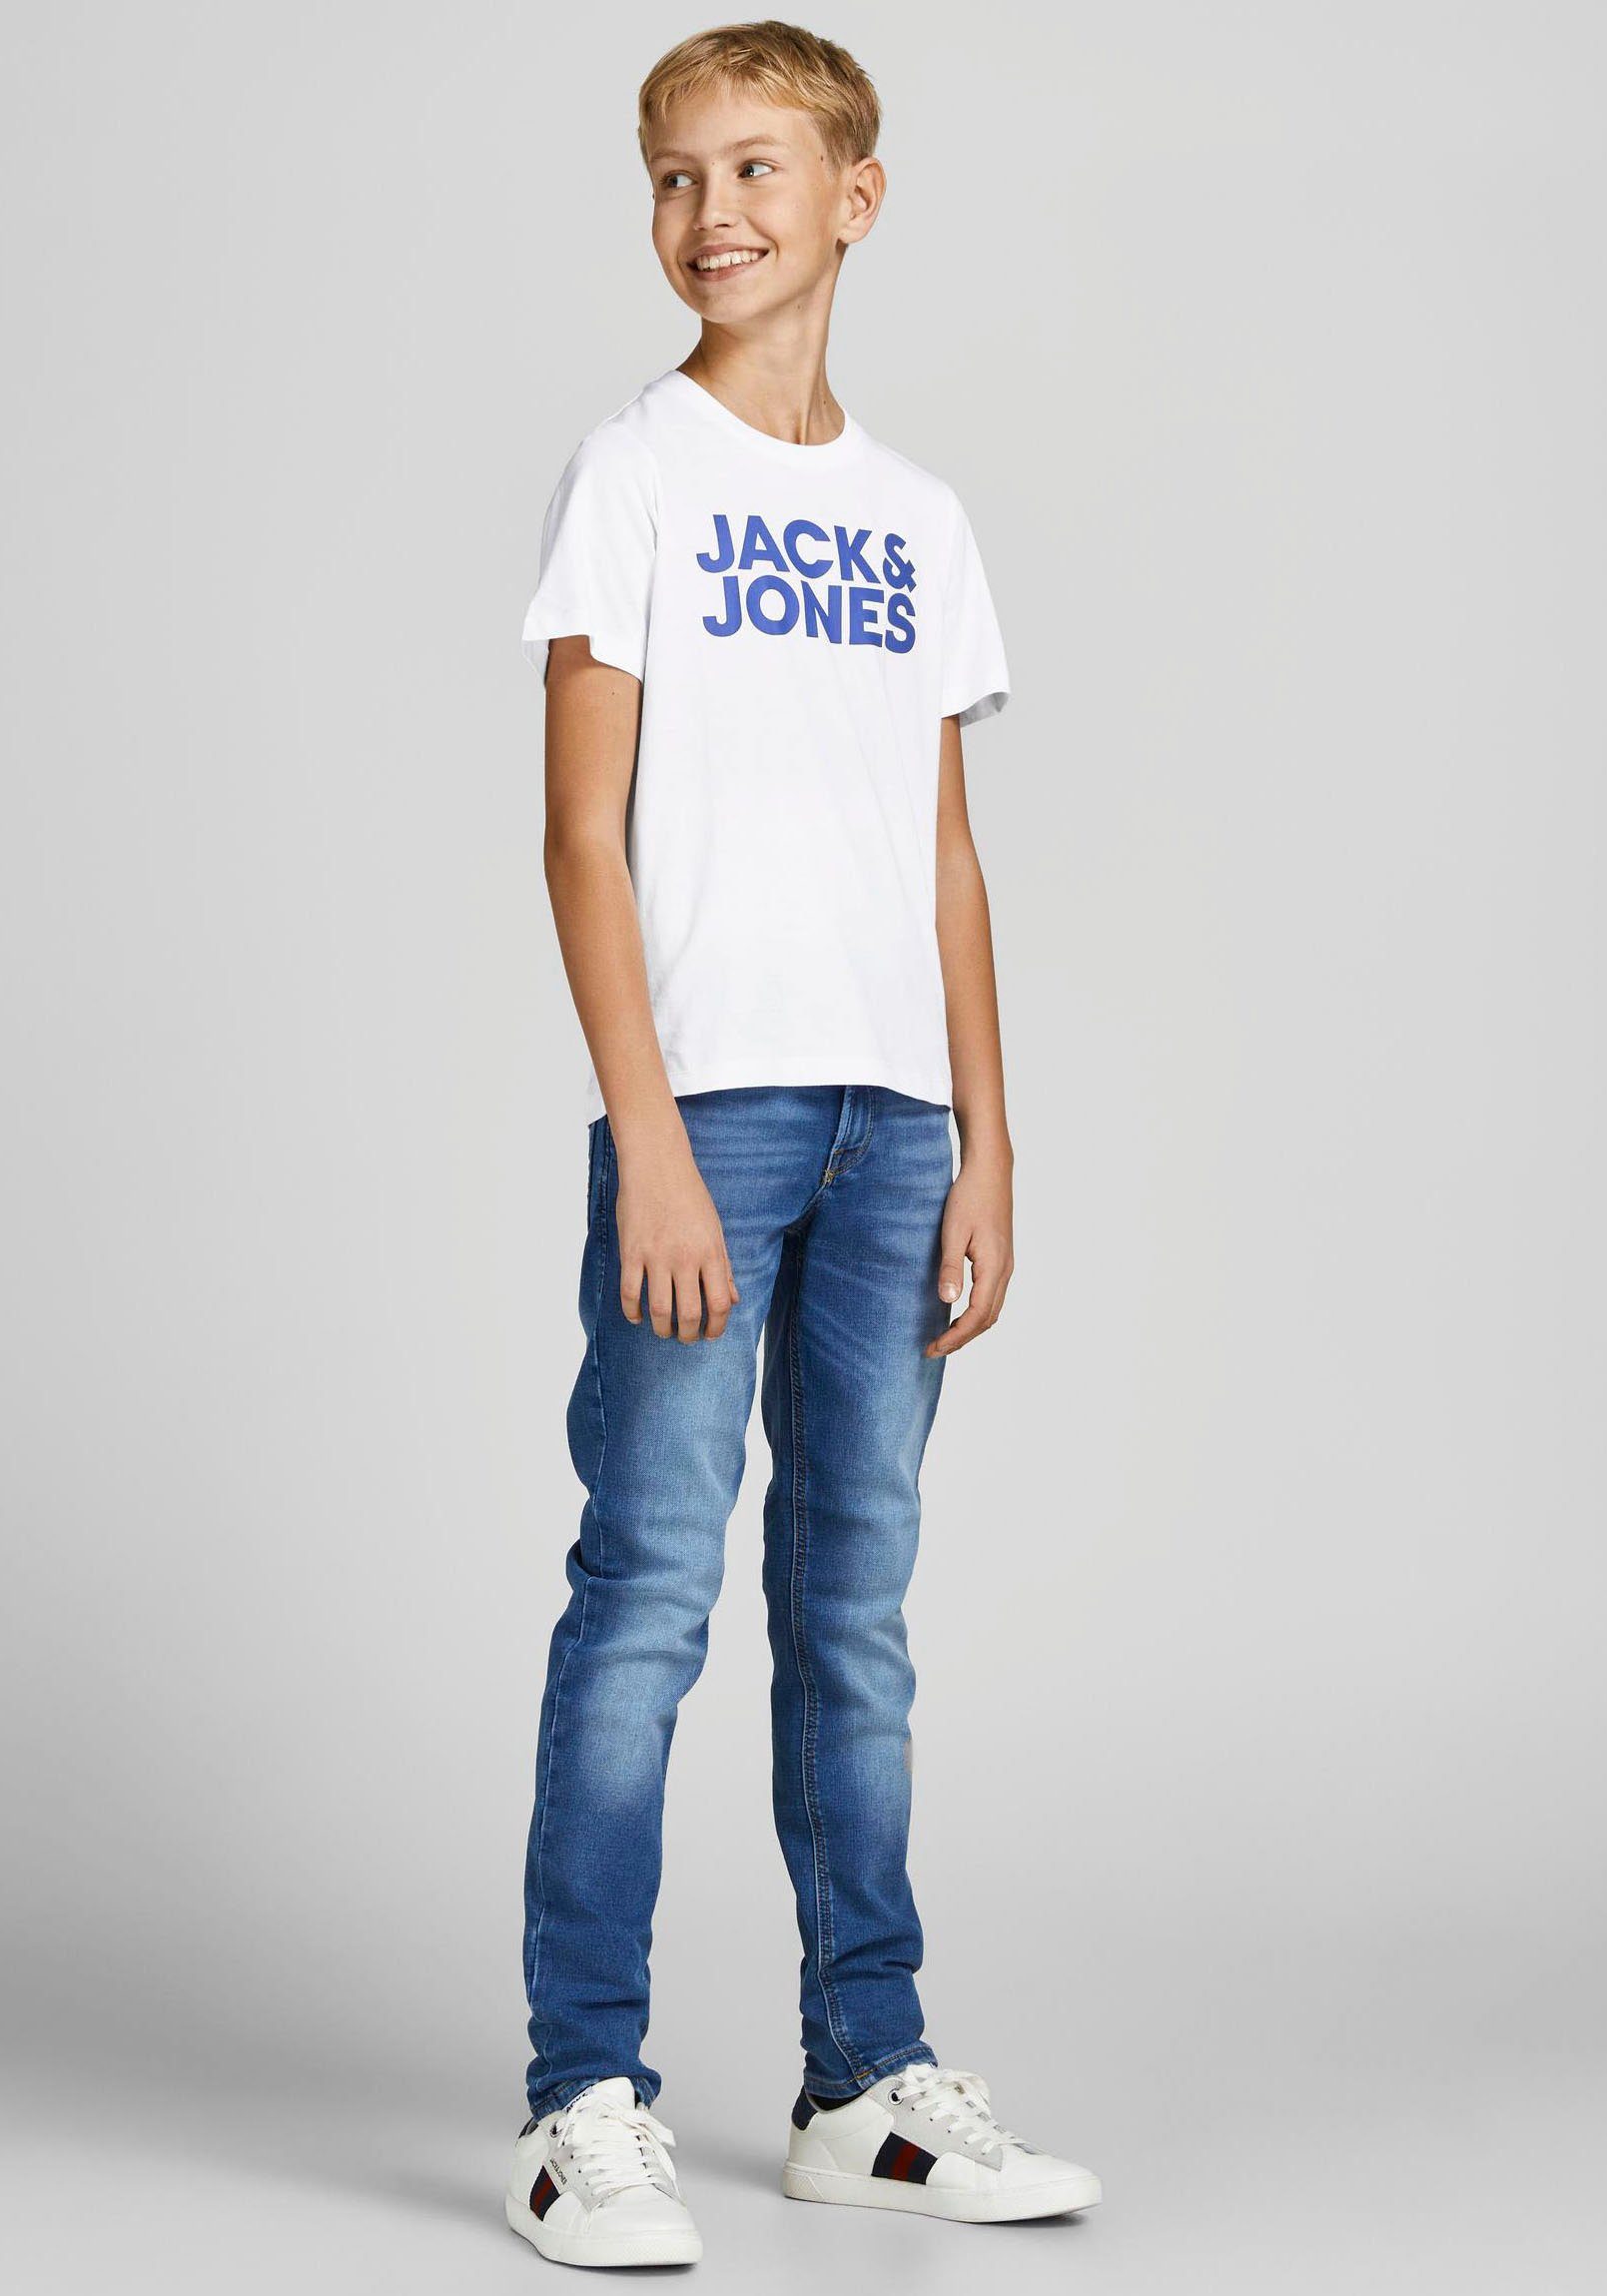 & 2-tlg) T-Shirt Jack Junior Jones (Packung,